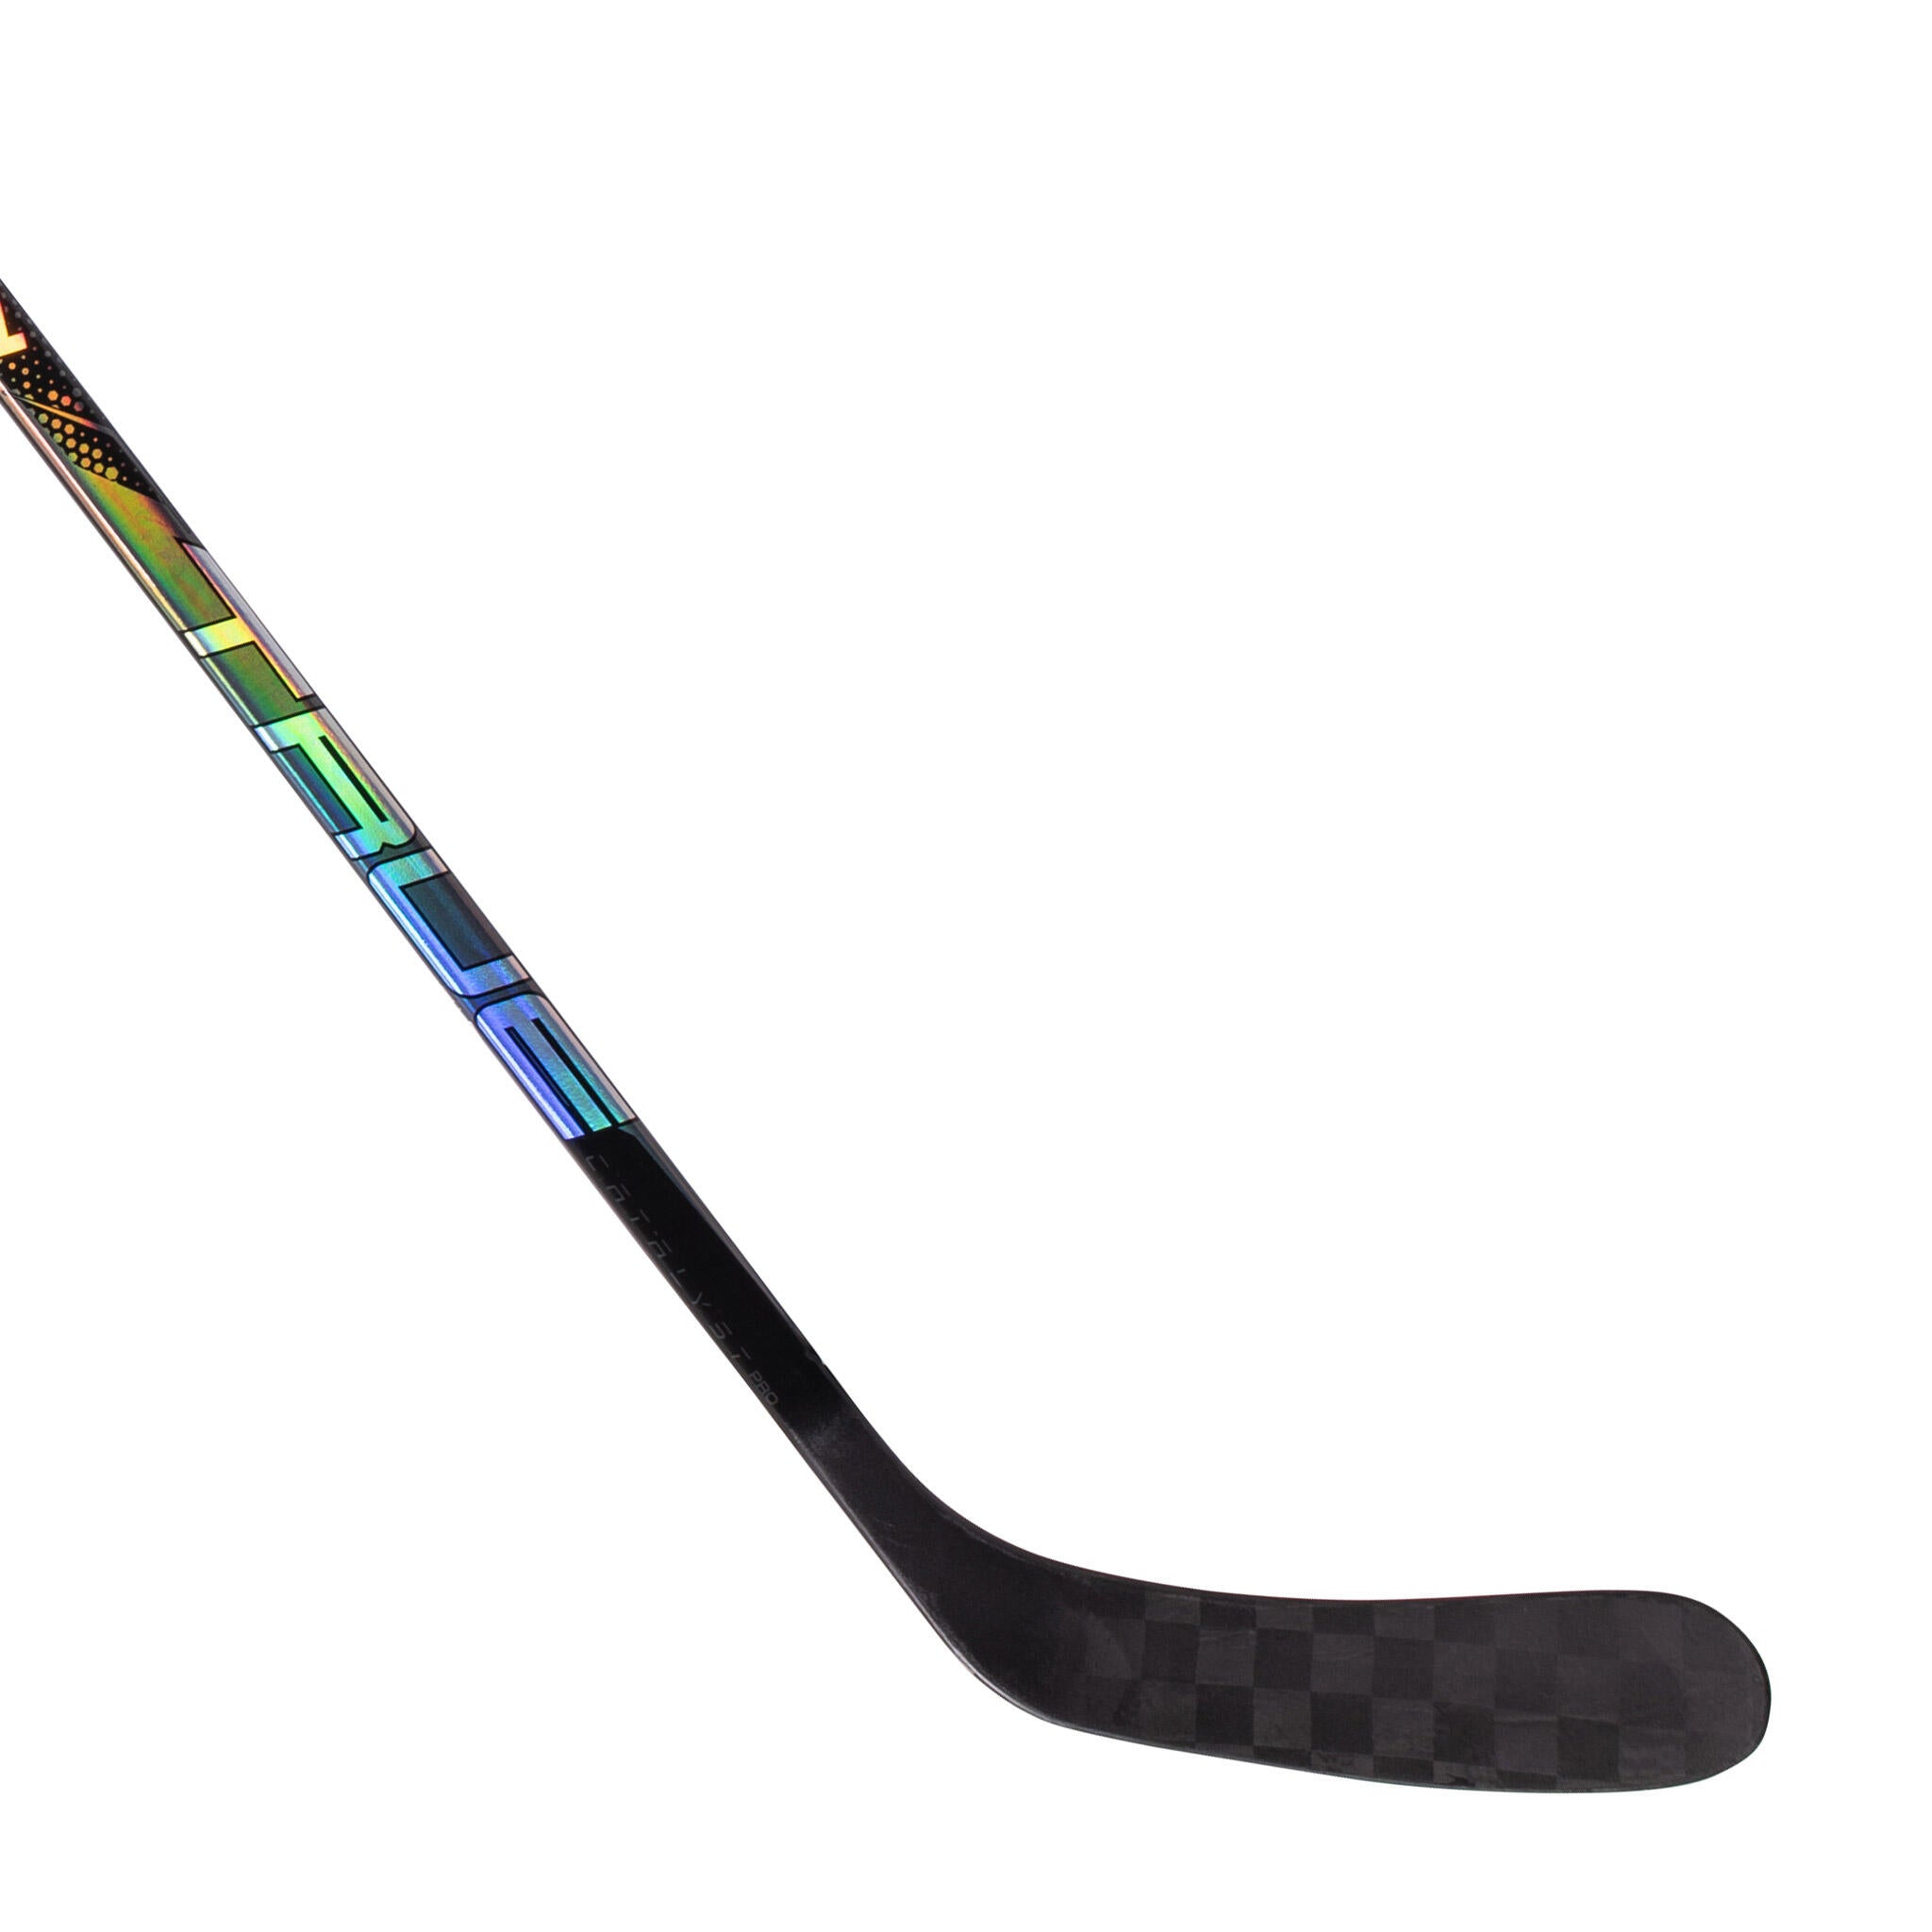 Bauer Vapor X:Shift Pro Senior Hockey Pants (2020) - Source Exclusive